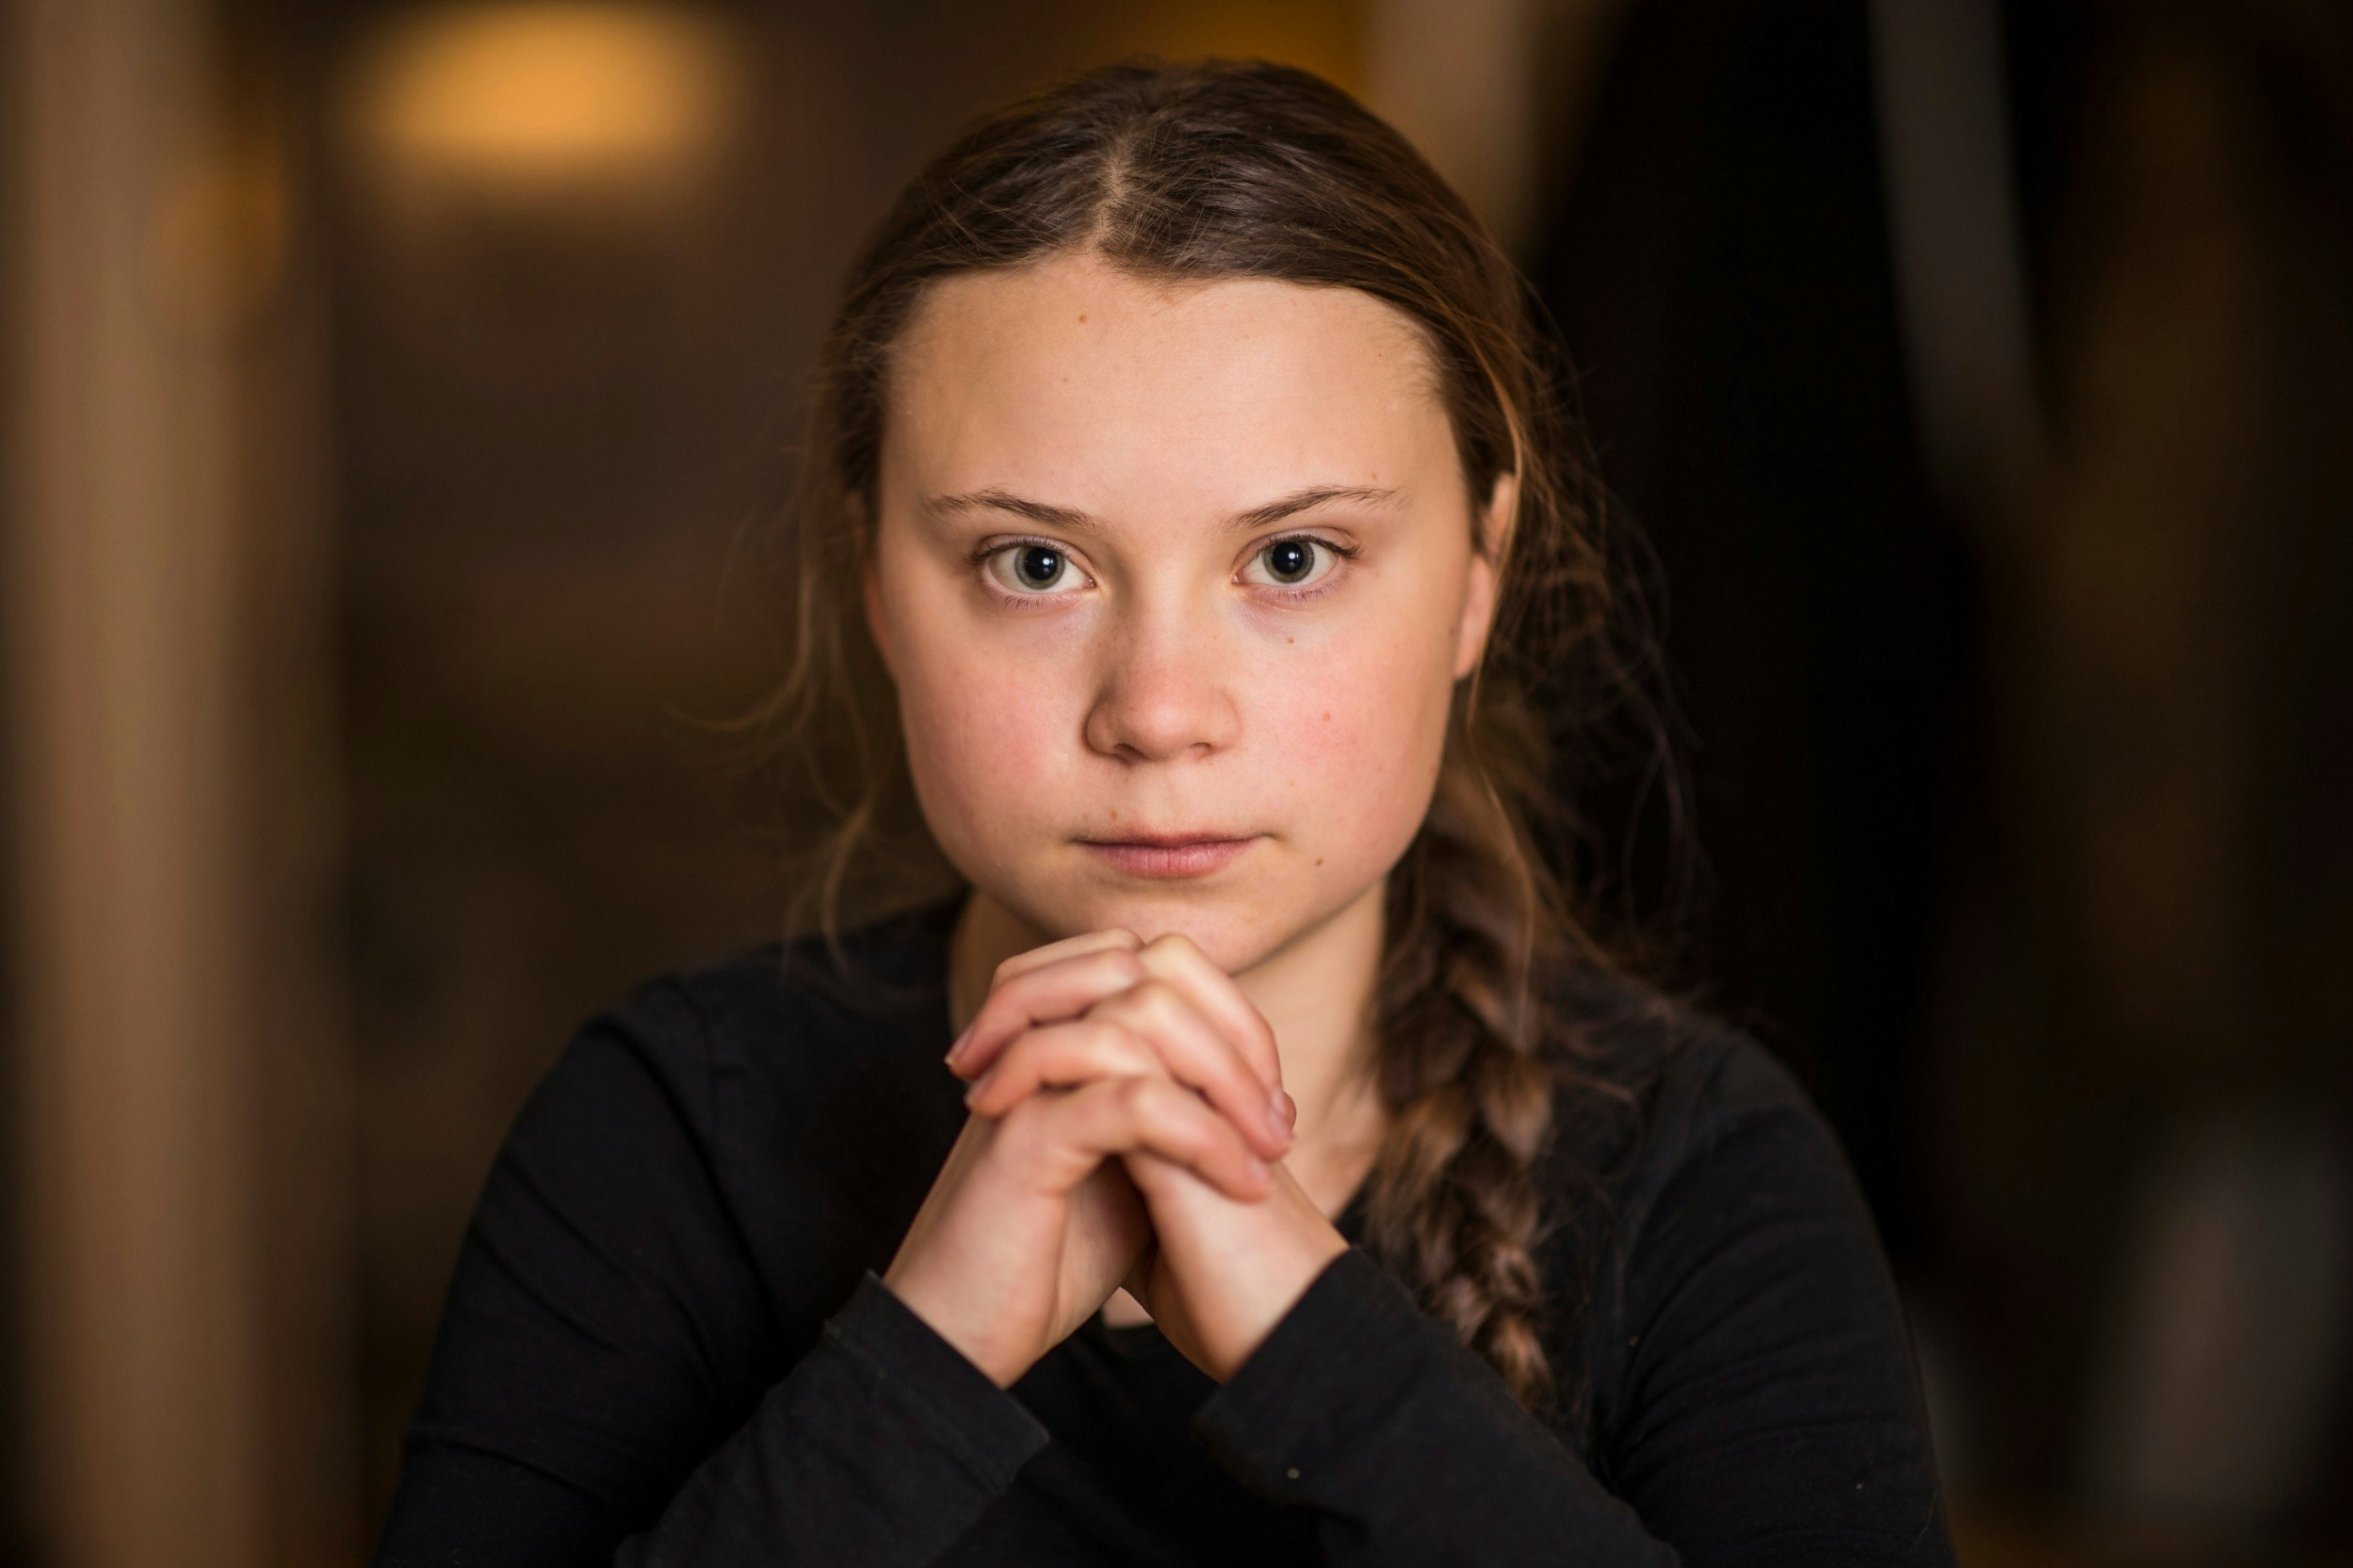 A portrait of Greta Thunberg